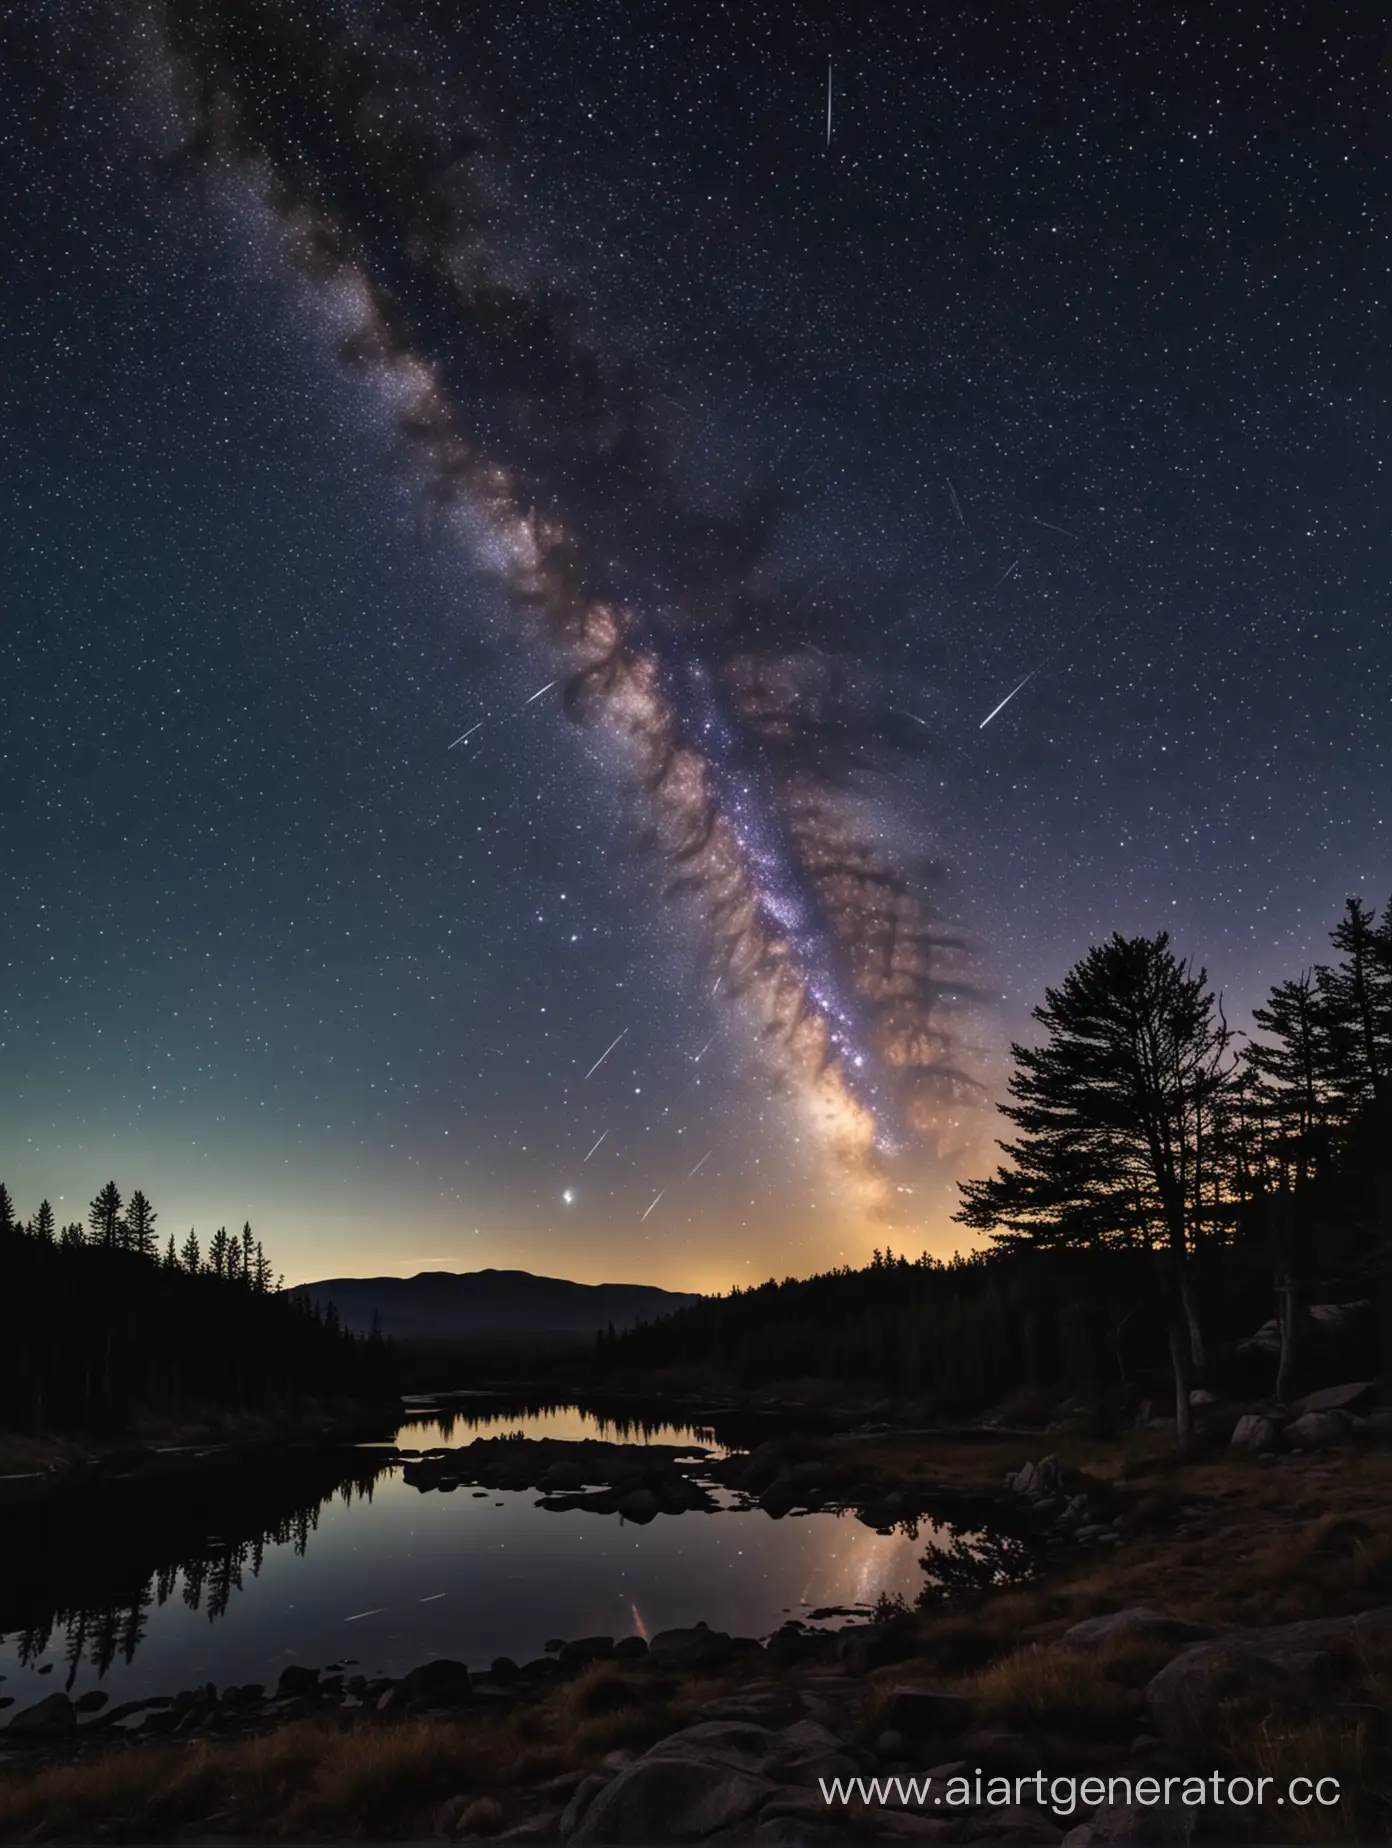 Spectacular-Celestial-Display-Mesmerizing-Meteor-Shower-Illuminating-Night-Sky